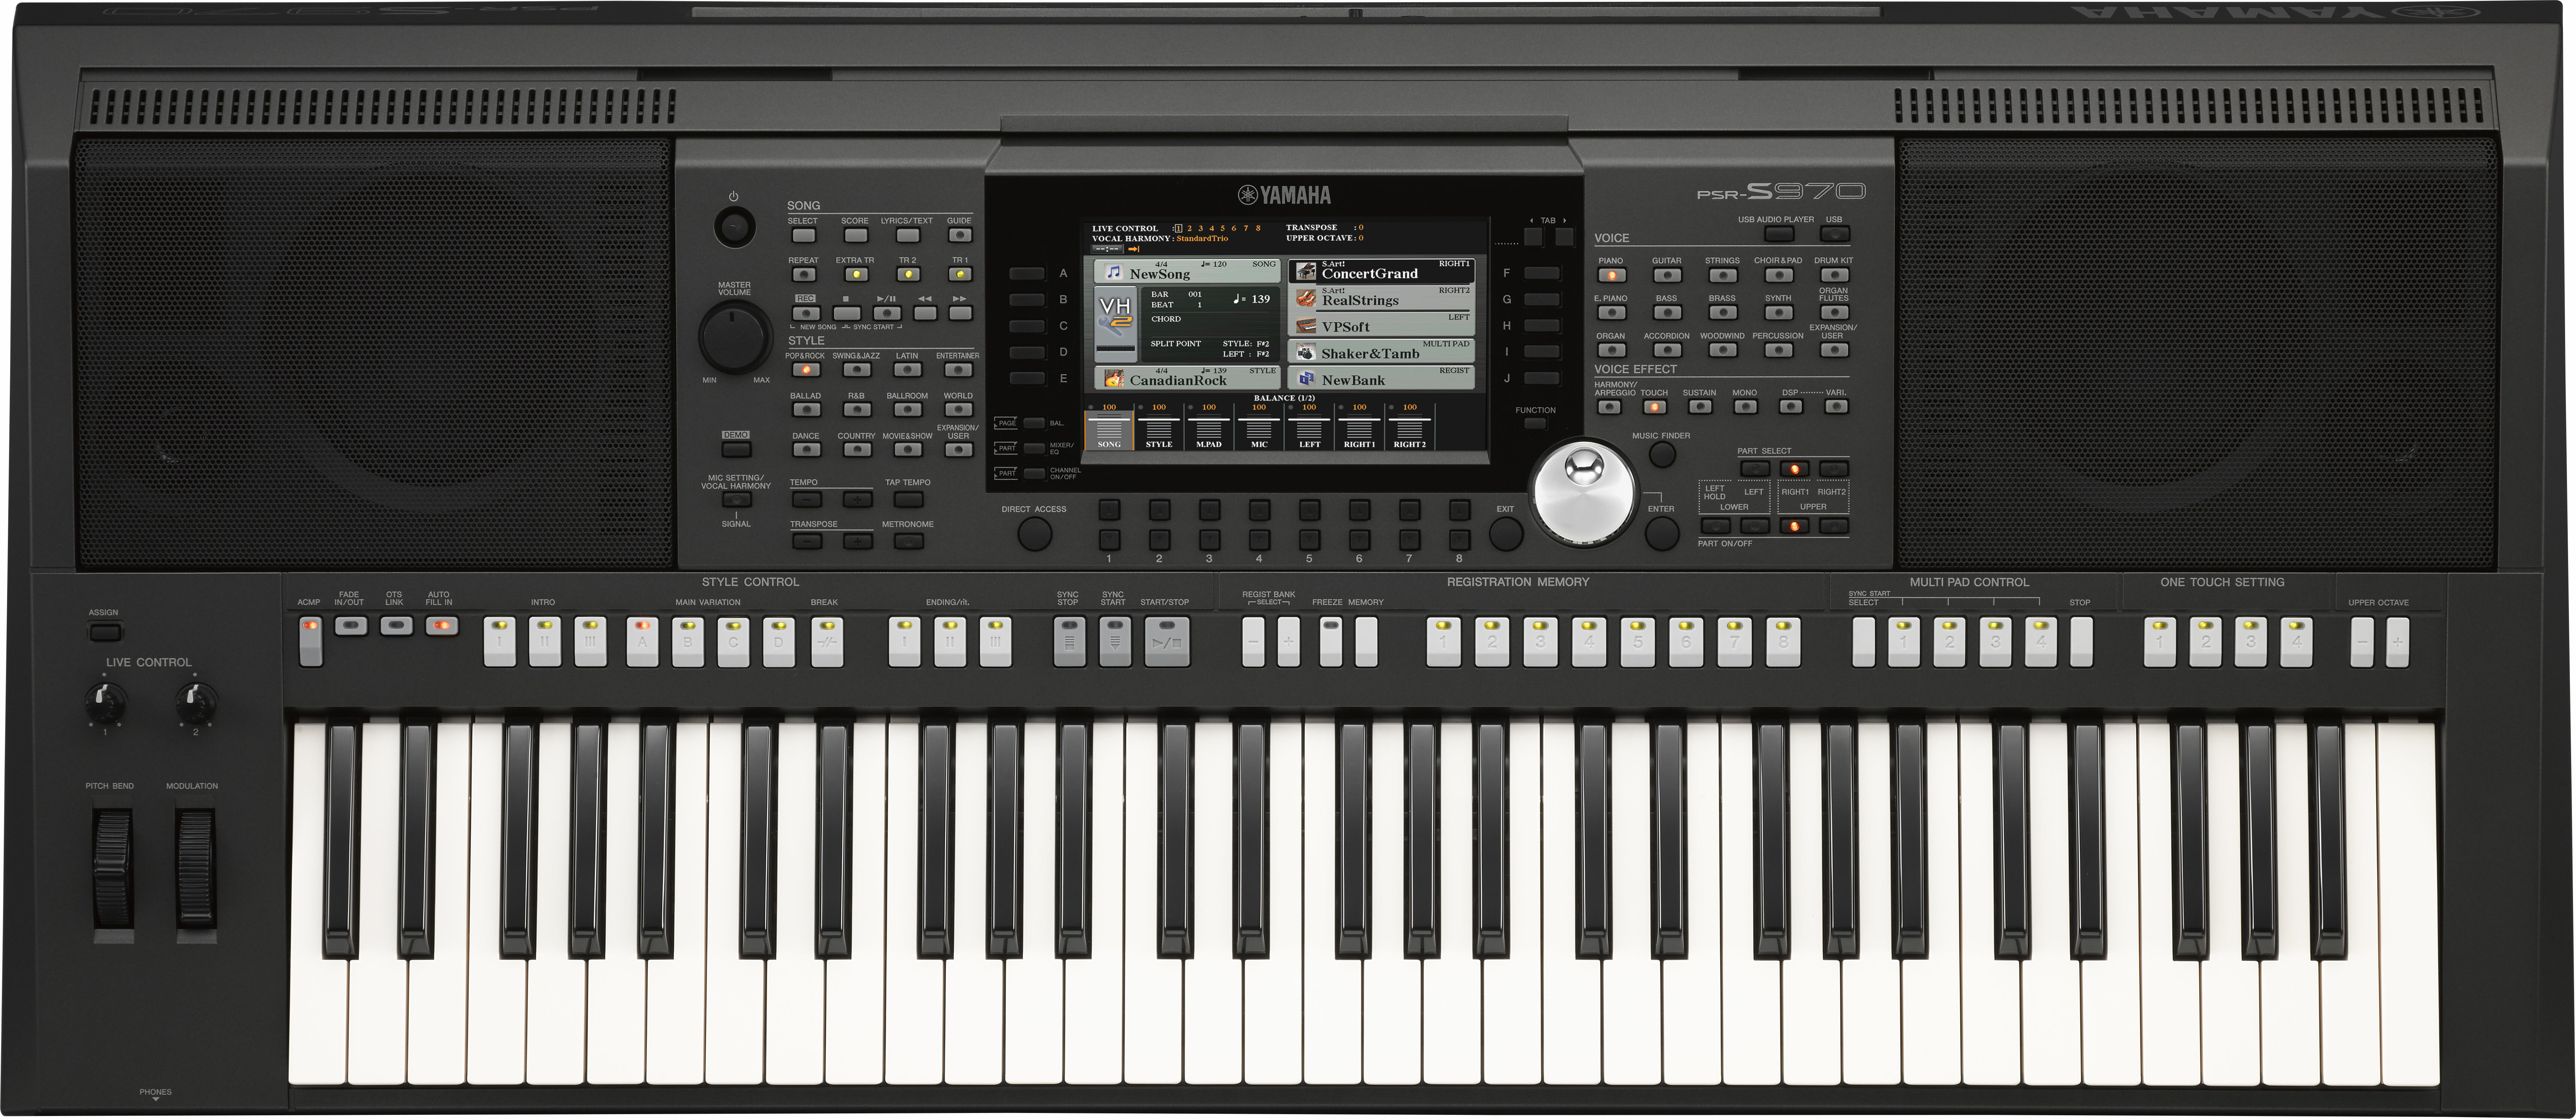 Yamaha Psr S970 - Entertainer Keyboard - Main picture